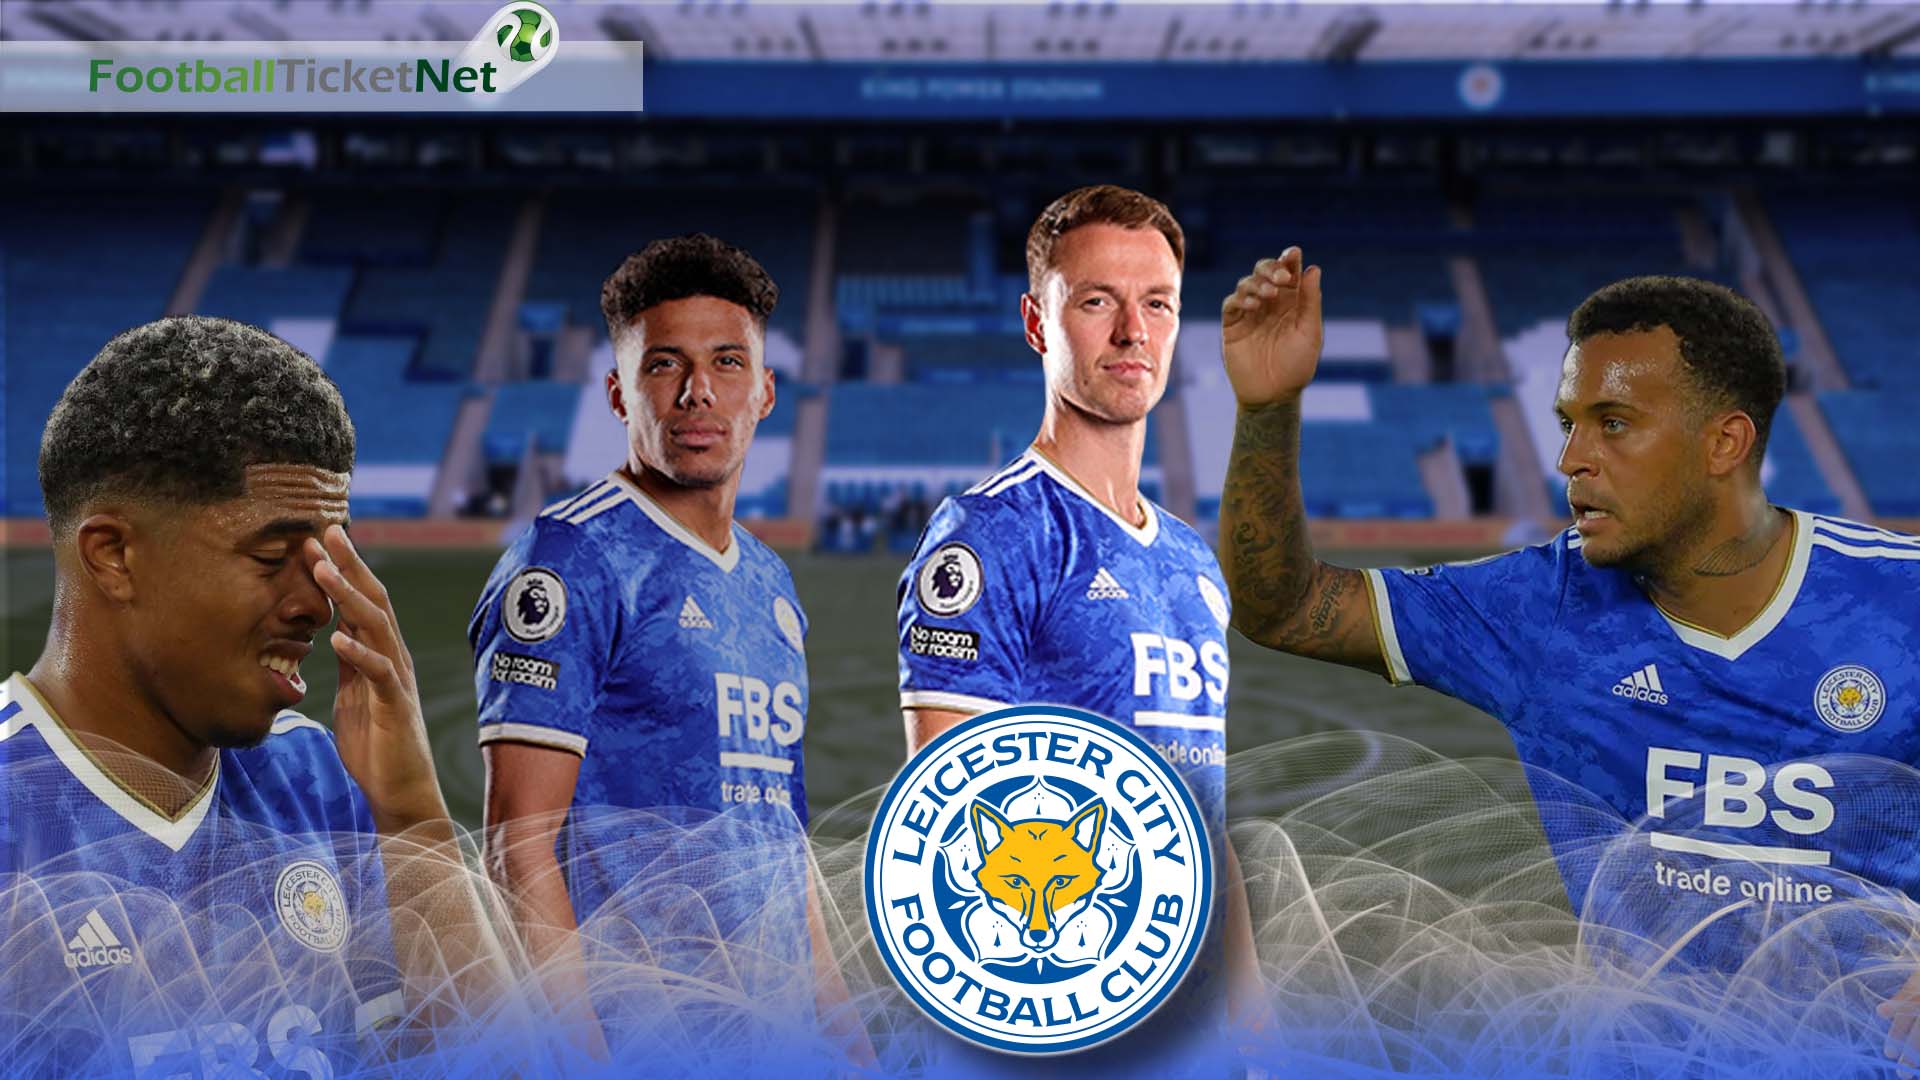 Buy Leicester City Football Tickets 2020/21 | Football Ticket Net